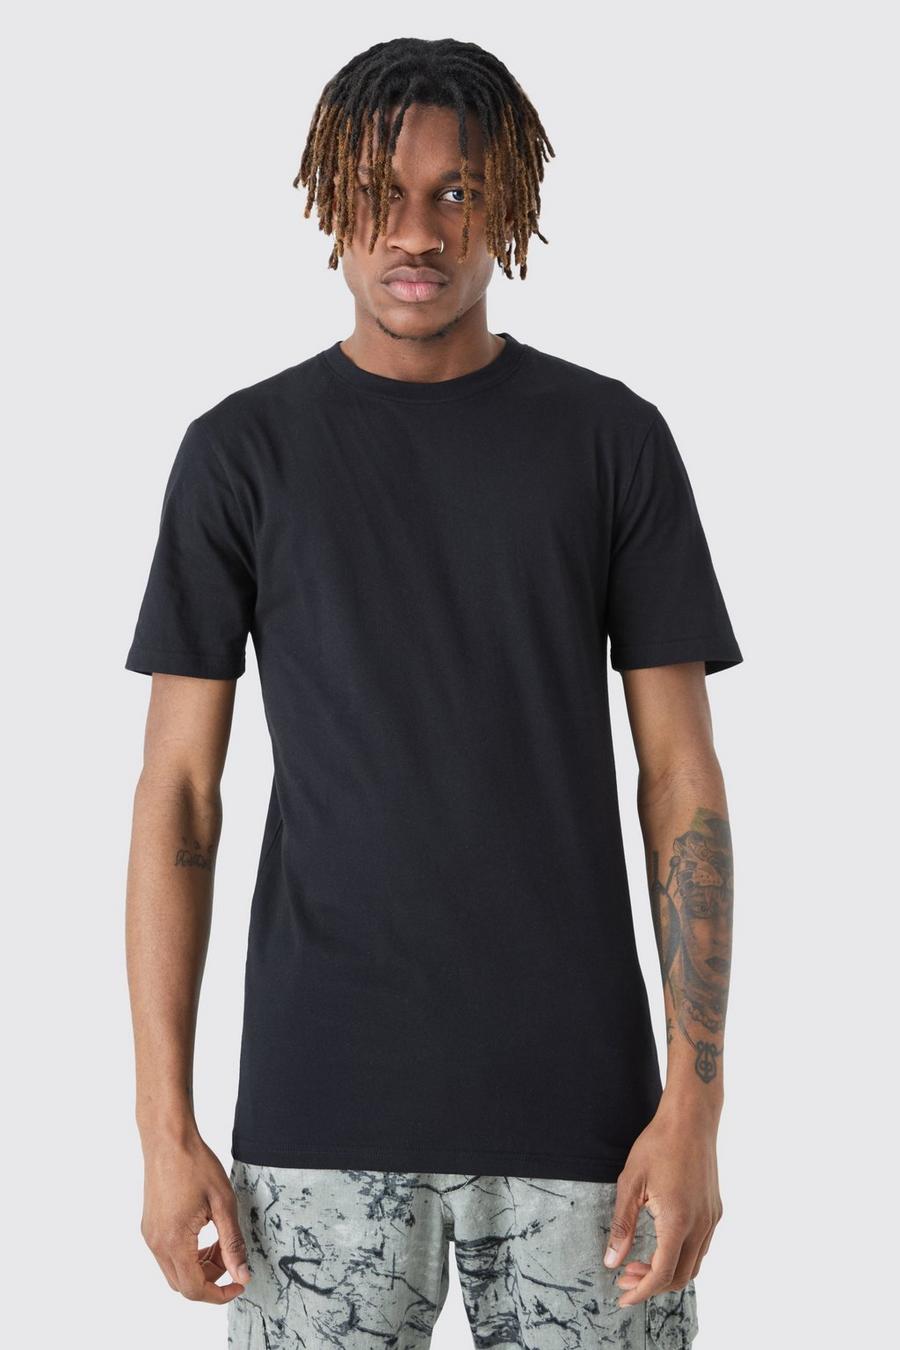 T-shirt Tall attillata - set di 2 paia, Black